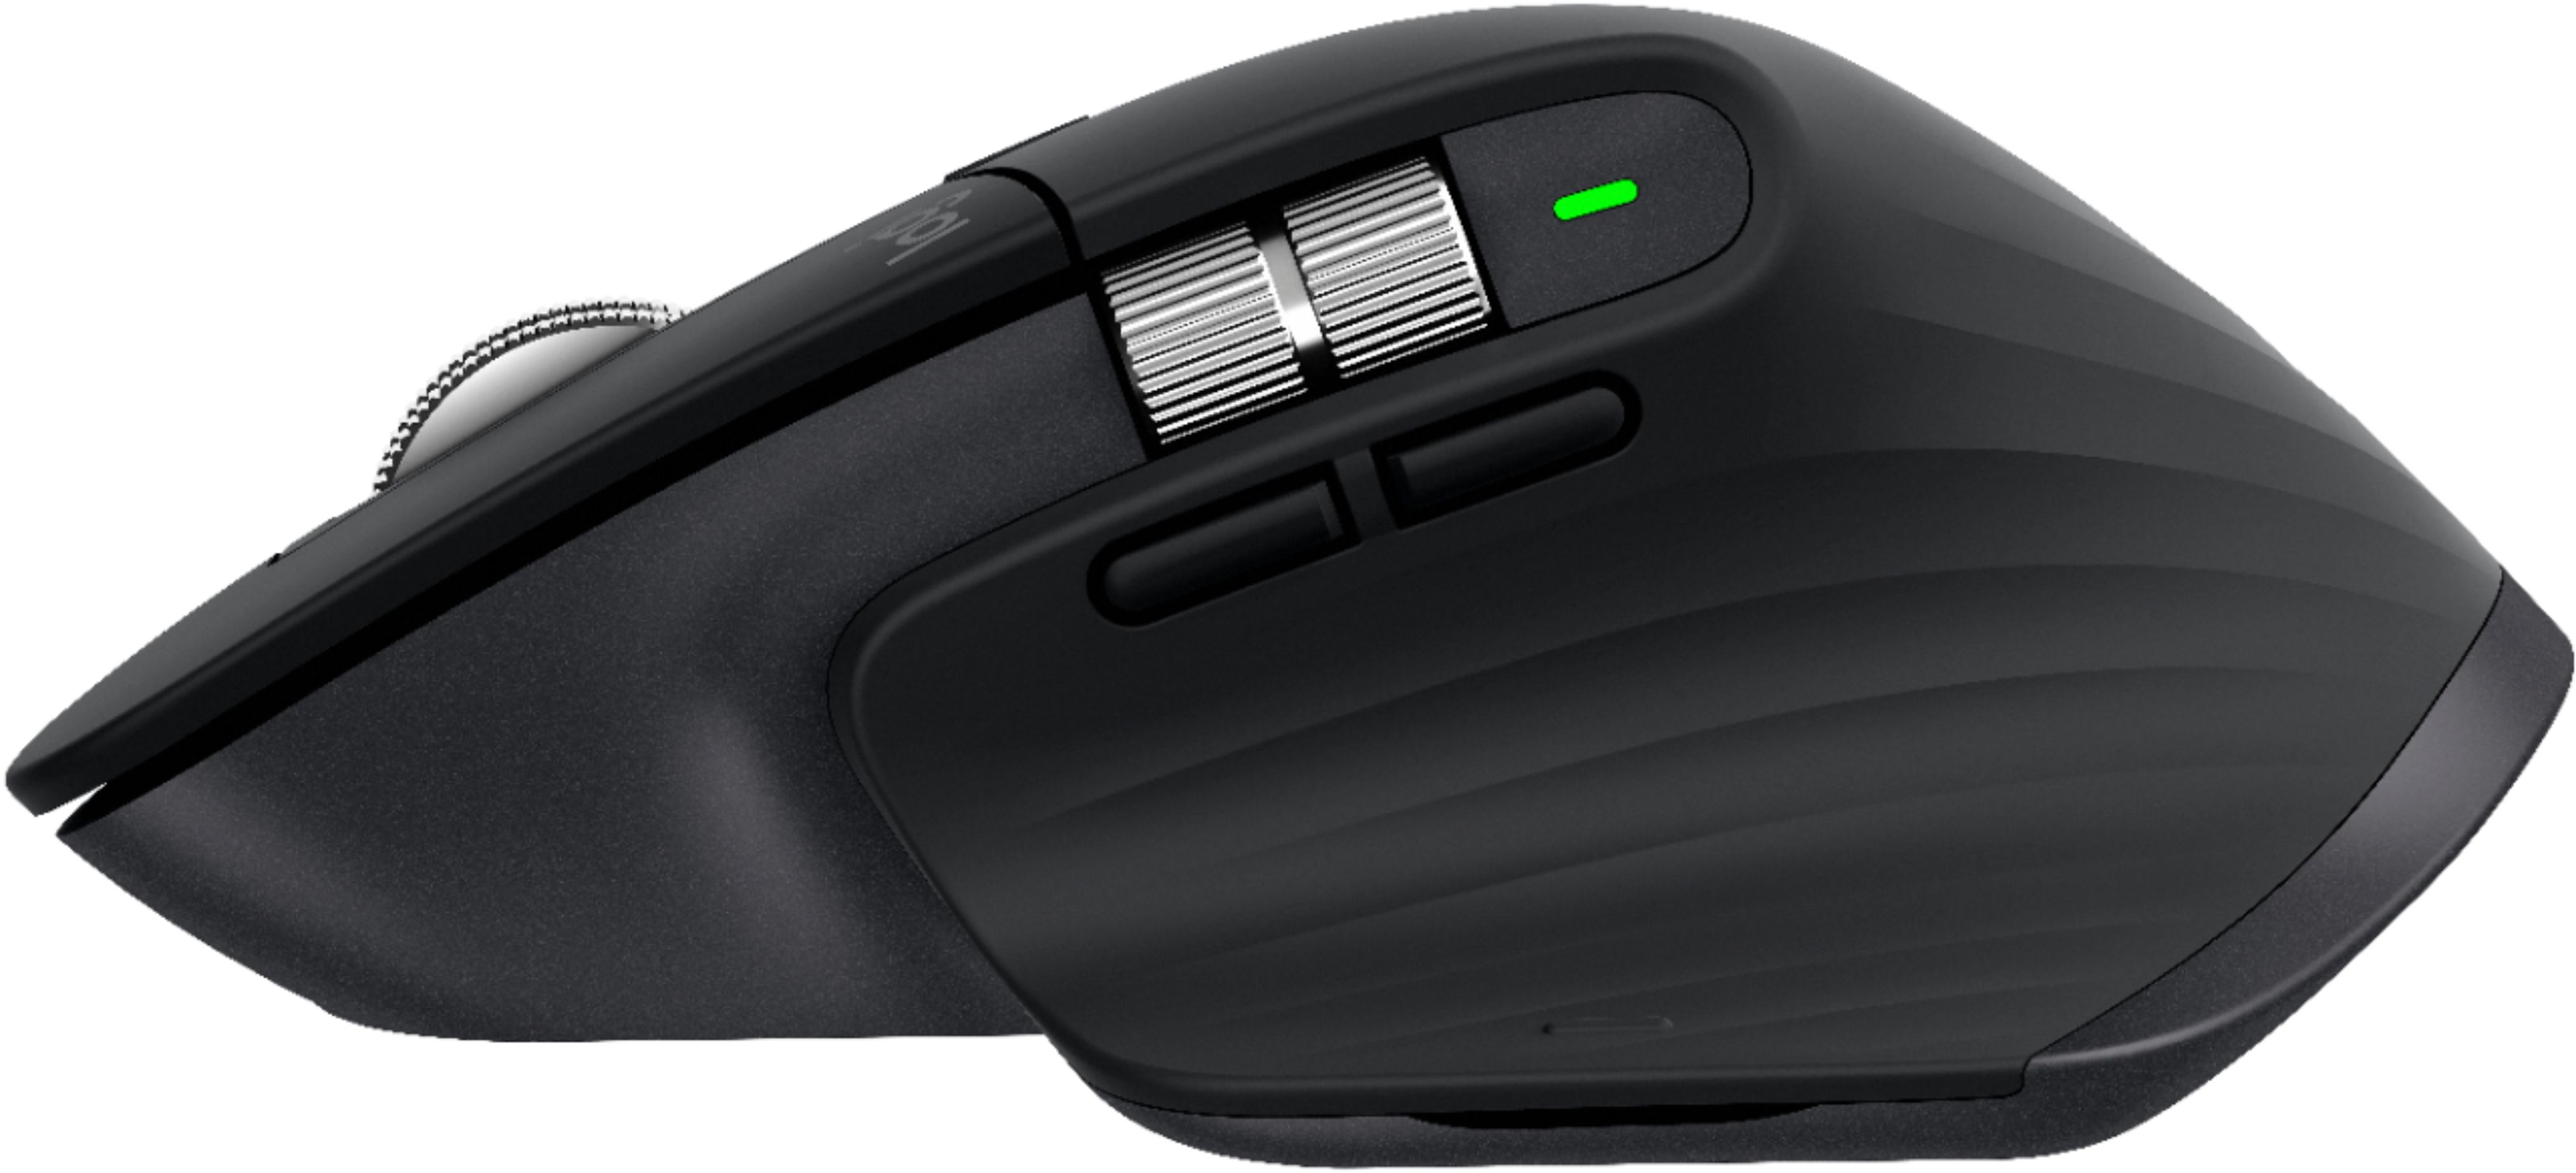 Logitech MX Master 3 Advanced Wireless USB/Bluetooth Laser Mouse 